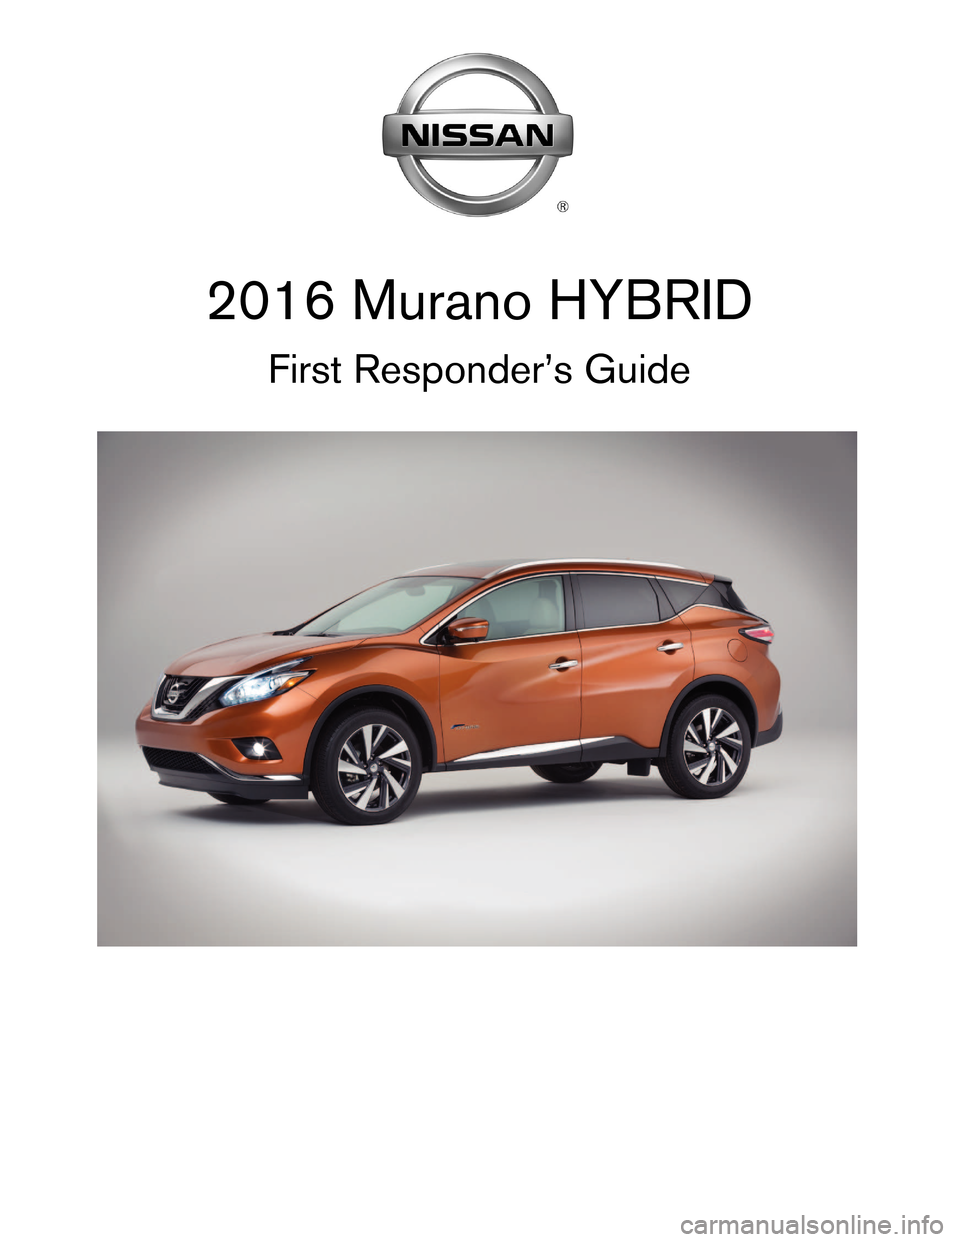 NISSAN MURANO HYBRID 2016 3.G First Responders Guide 2016 Murano HYBRID
First Responder’s Guide   